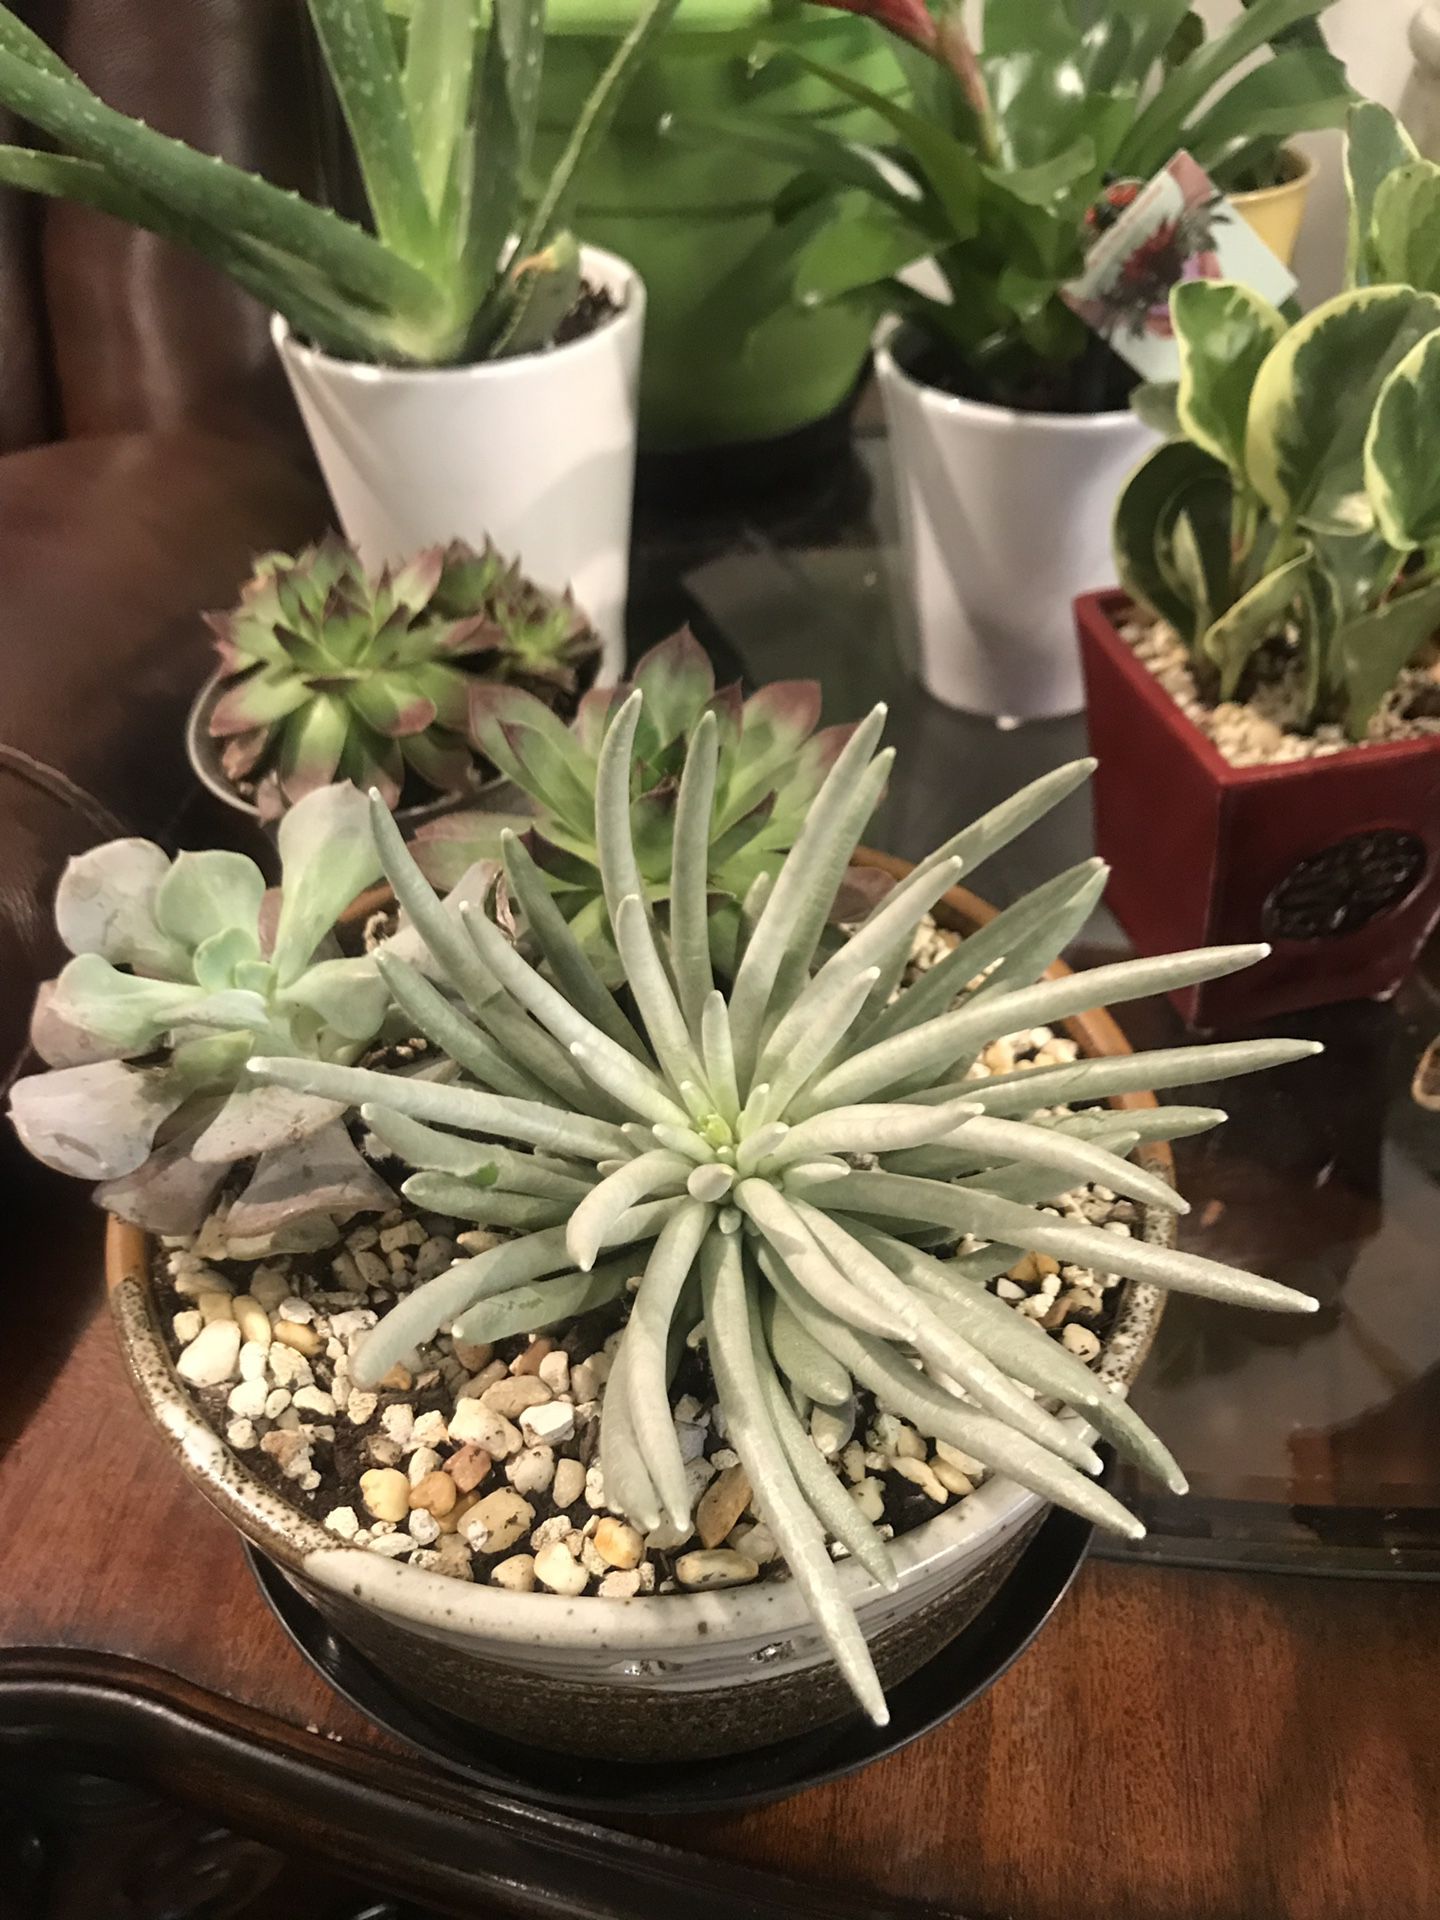 Cute varieties of succulents in the ceramic planter